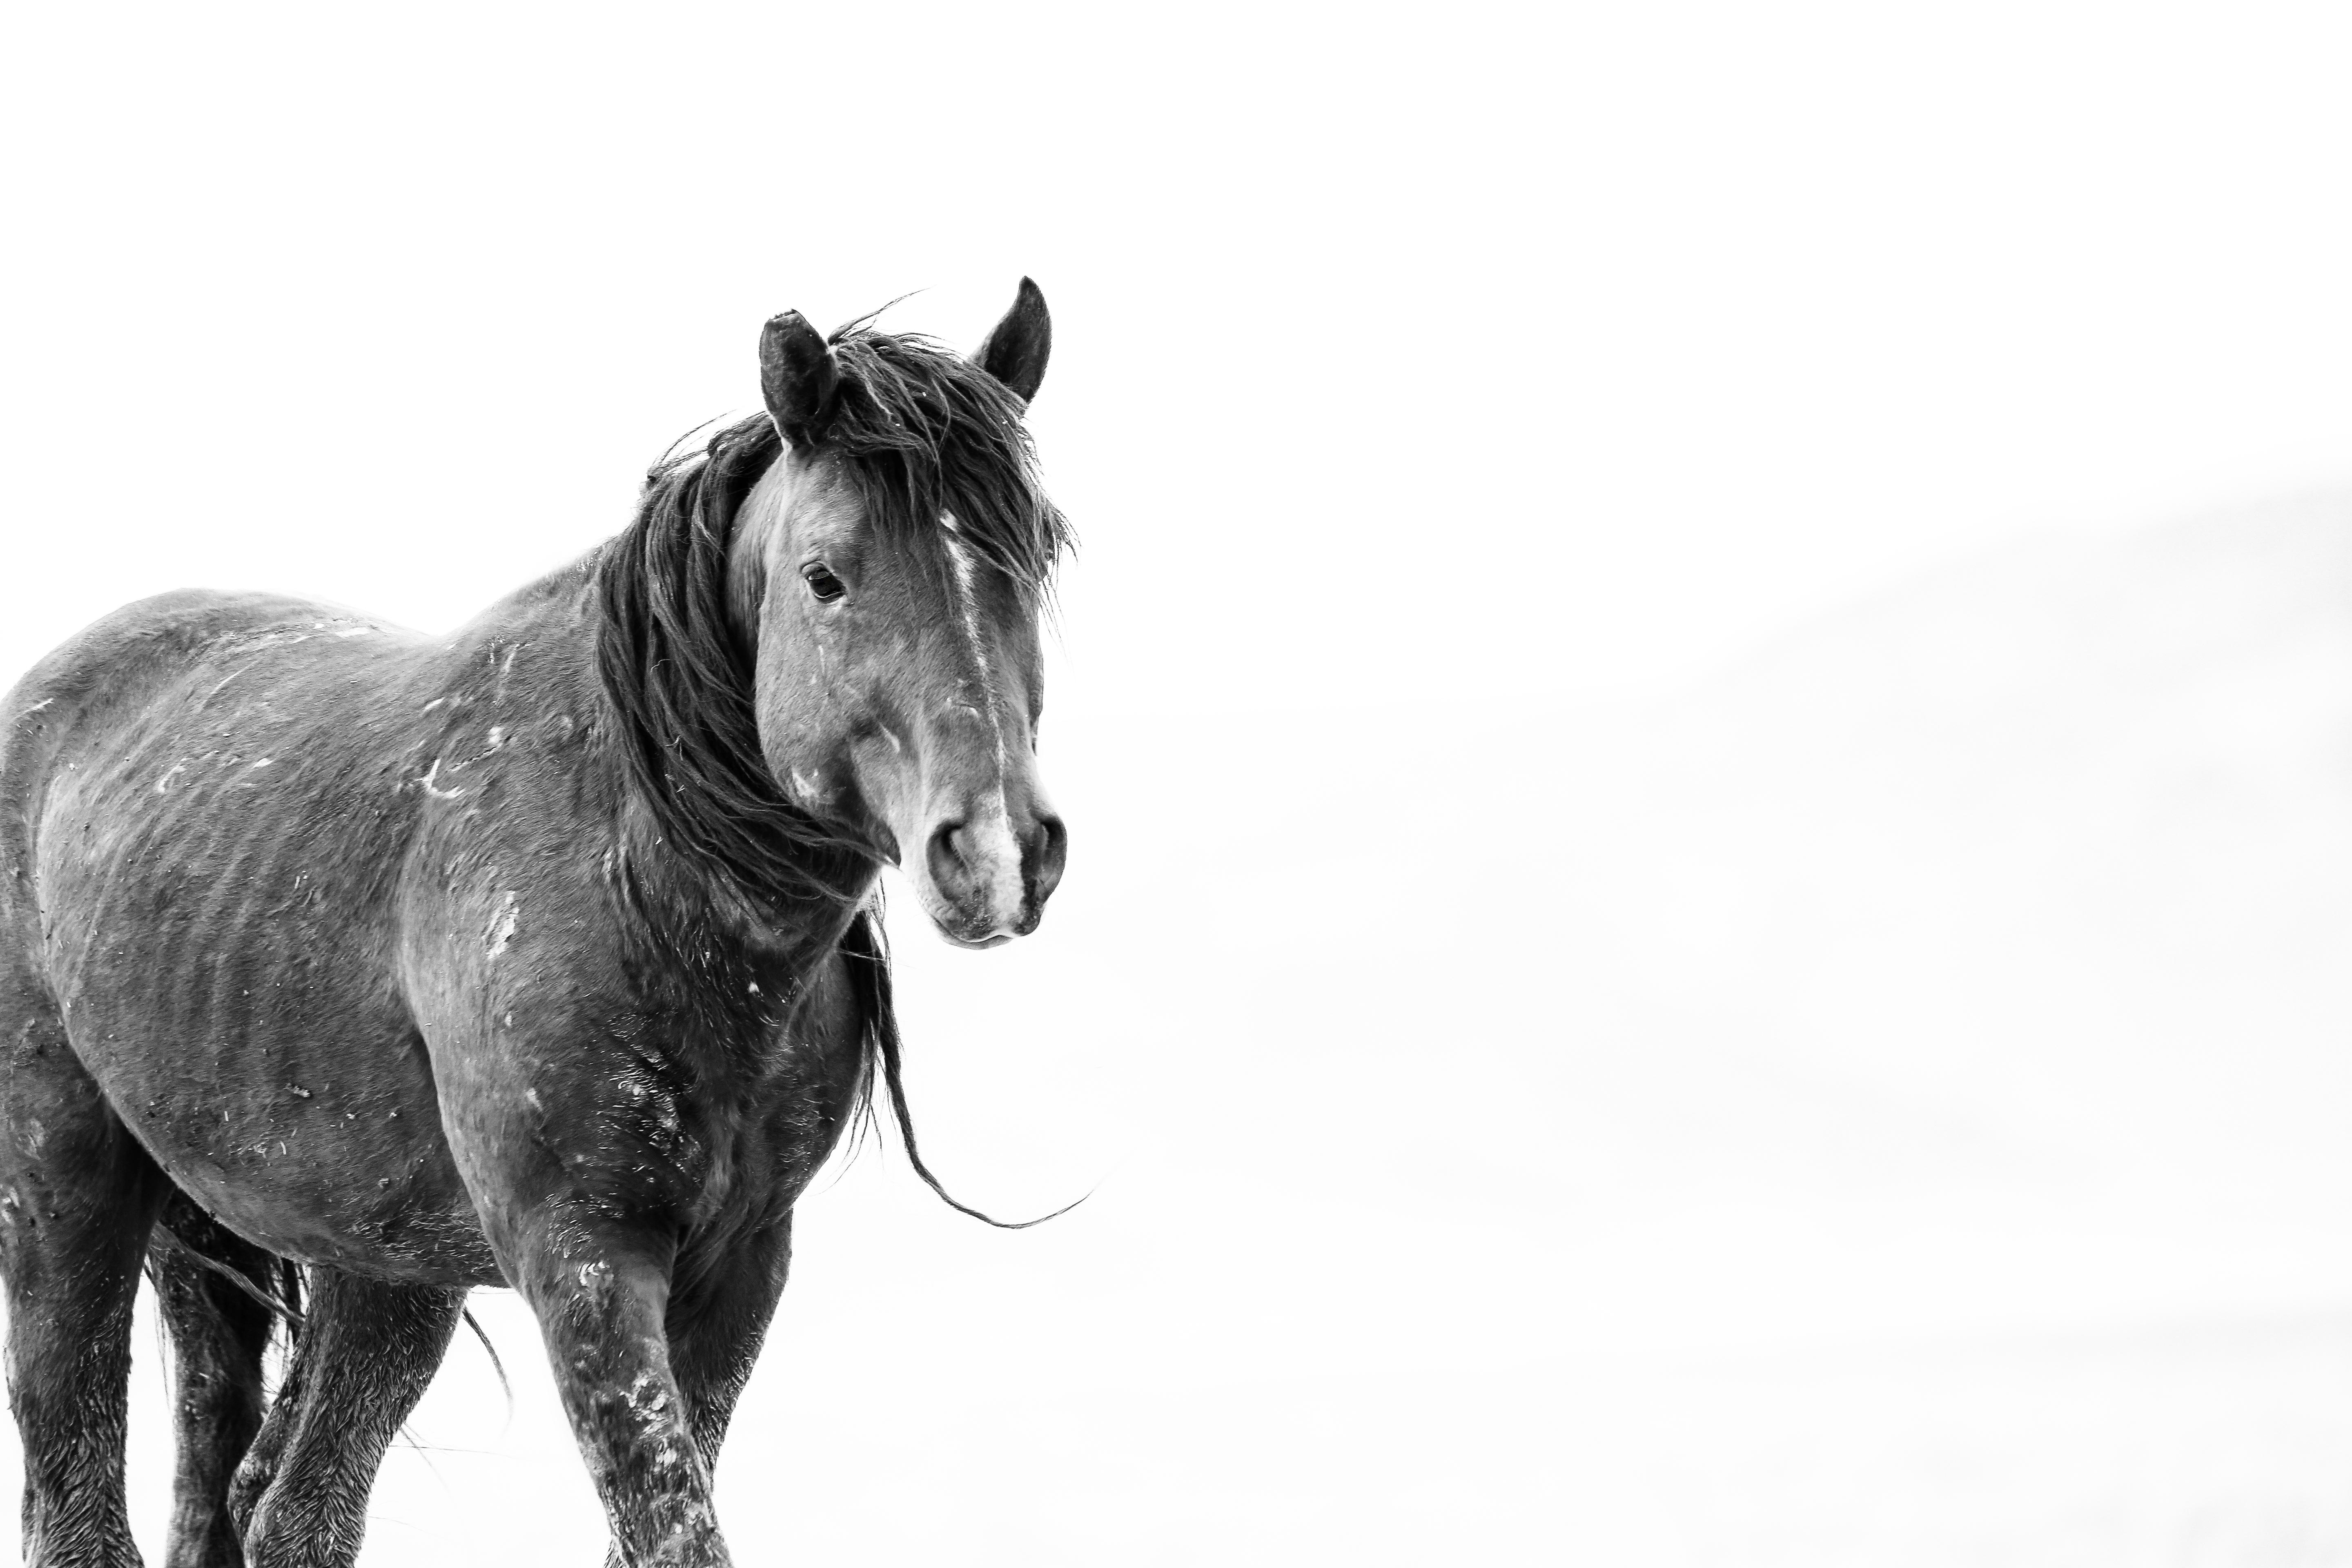 Black and White Photograph Shane Russeck - SOLO 36x48  Photographie noir et blanc « Wild Horses Mustang » (Femmes sauvages mourants), non signée